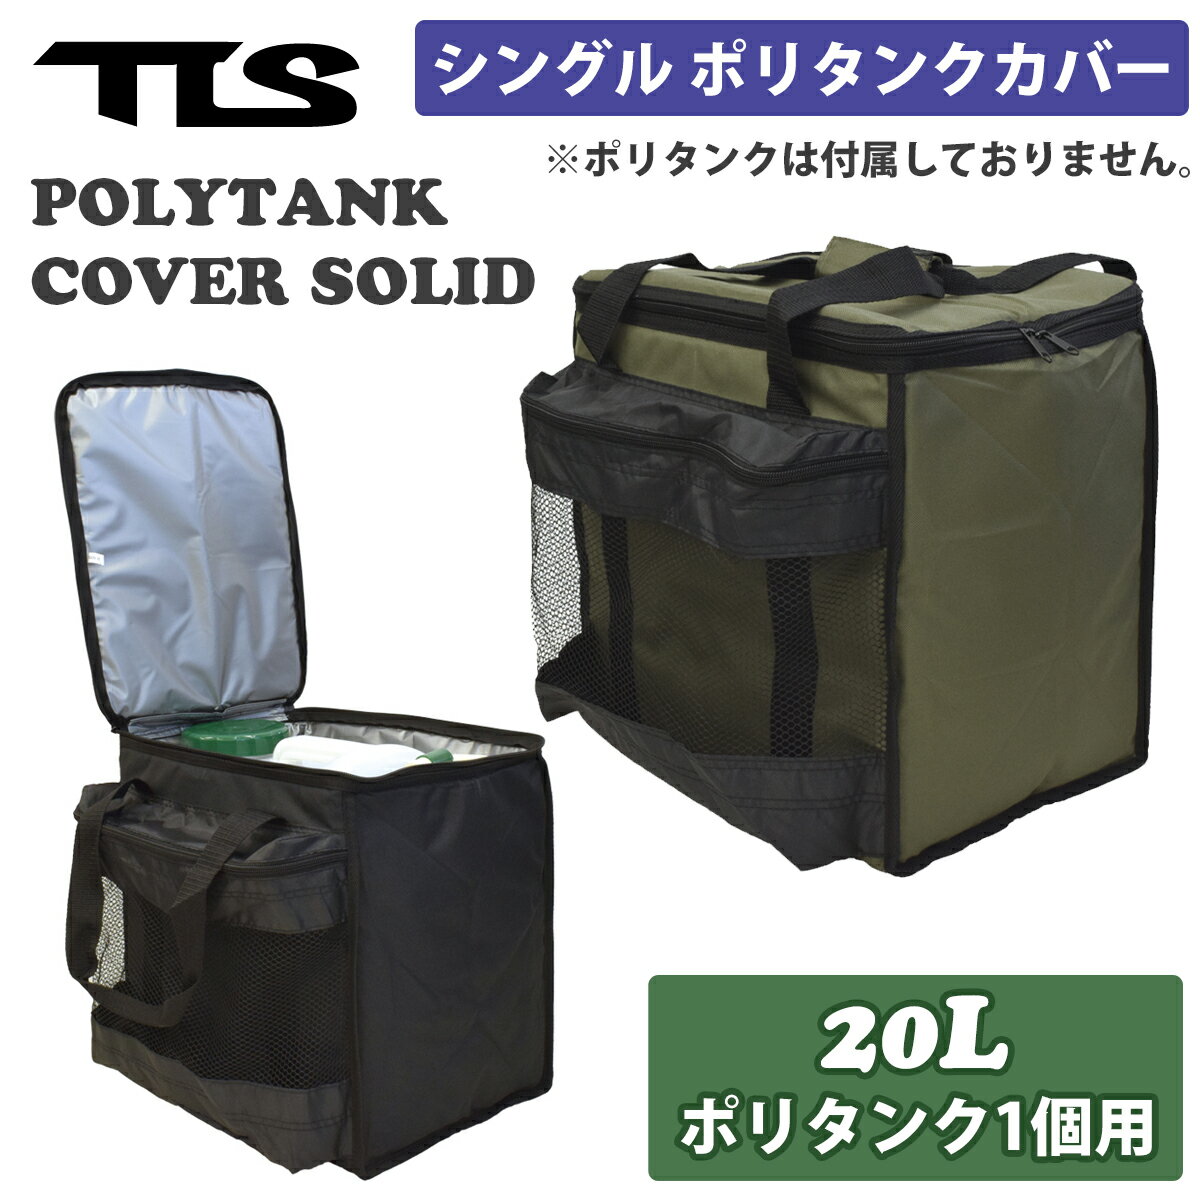 TLS TOOLS トゥールス ポリタンクカバー TLS POLYTANK COVER SOLID シングル 20L 保温 防水 カバー サーフィン グッズ クーラーボックス 保冷 メッシュポケット 日本正規品